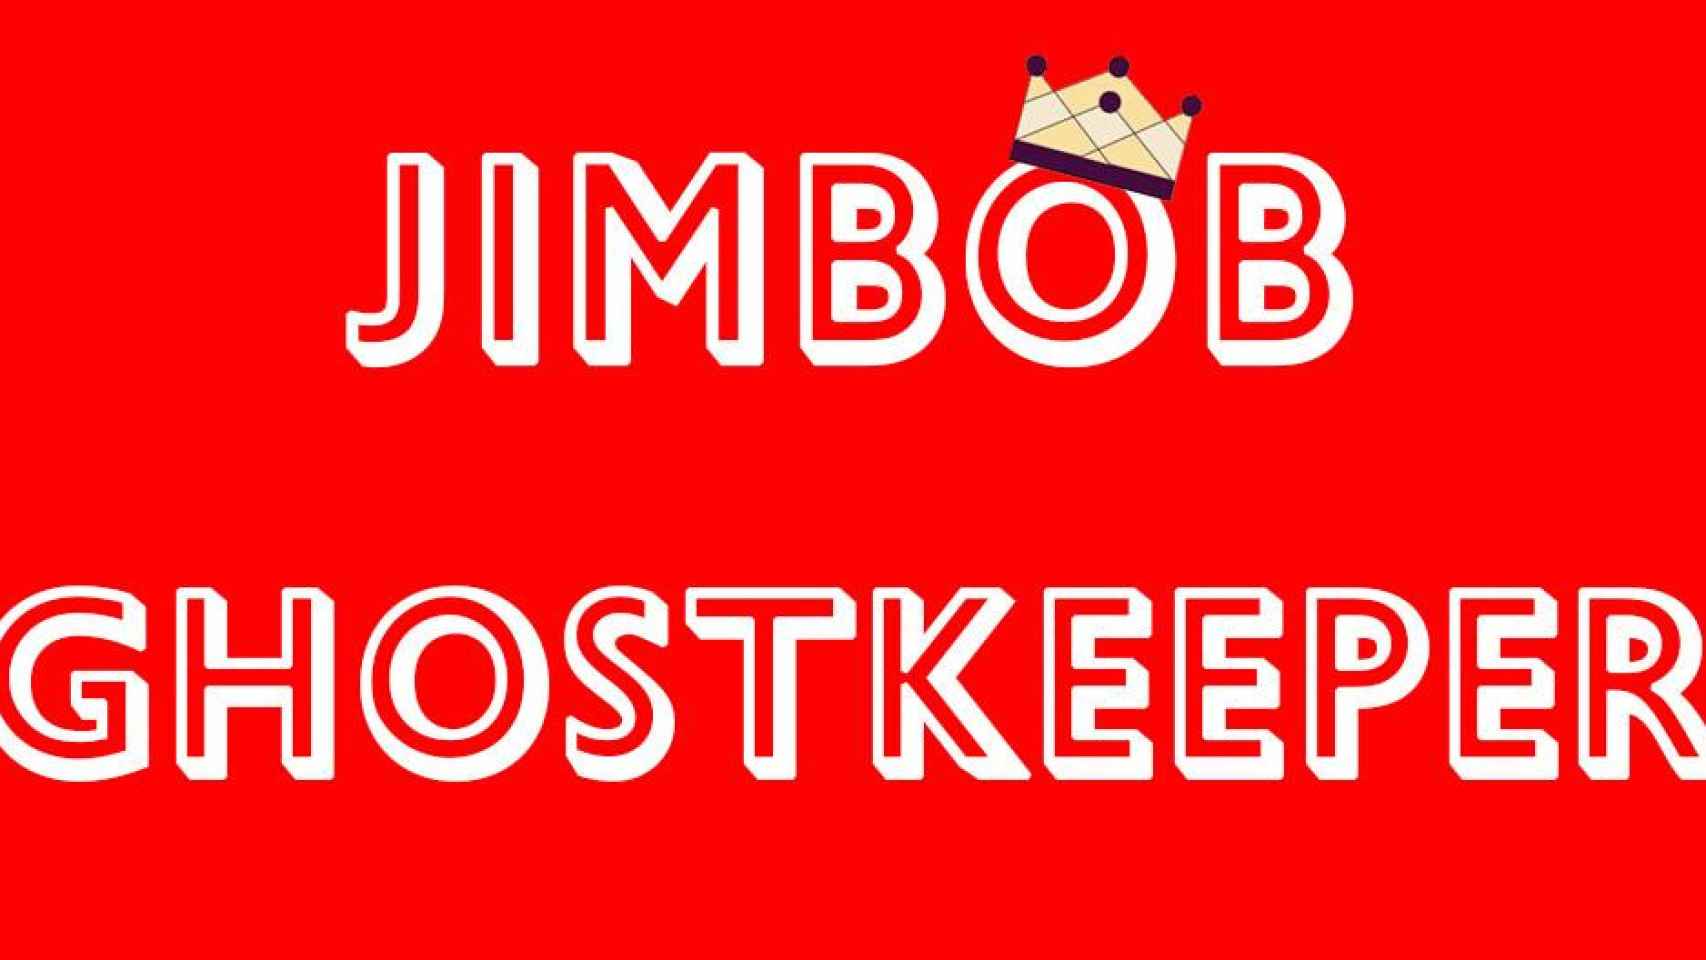 Jimbob Ghostkeeper, Mejor Nombre del Año 2018 / JOCAN